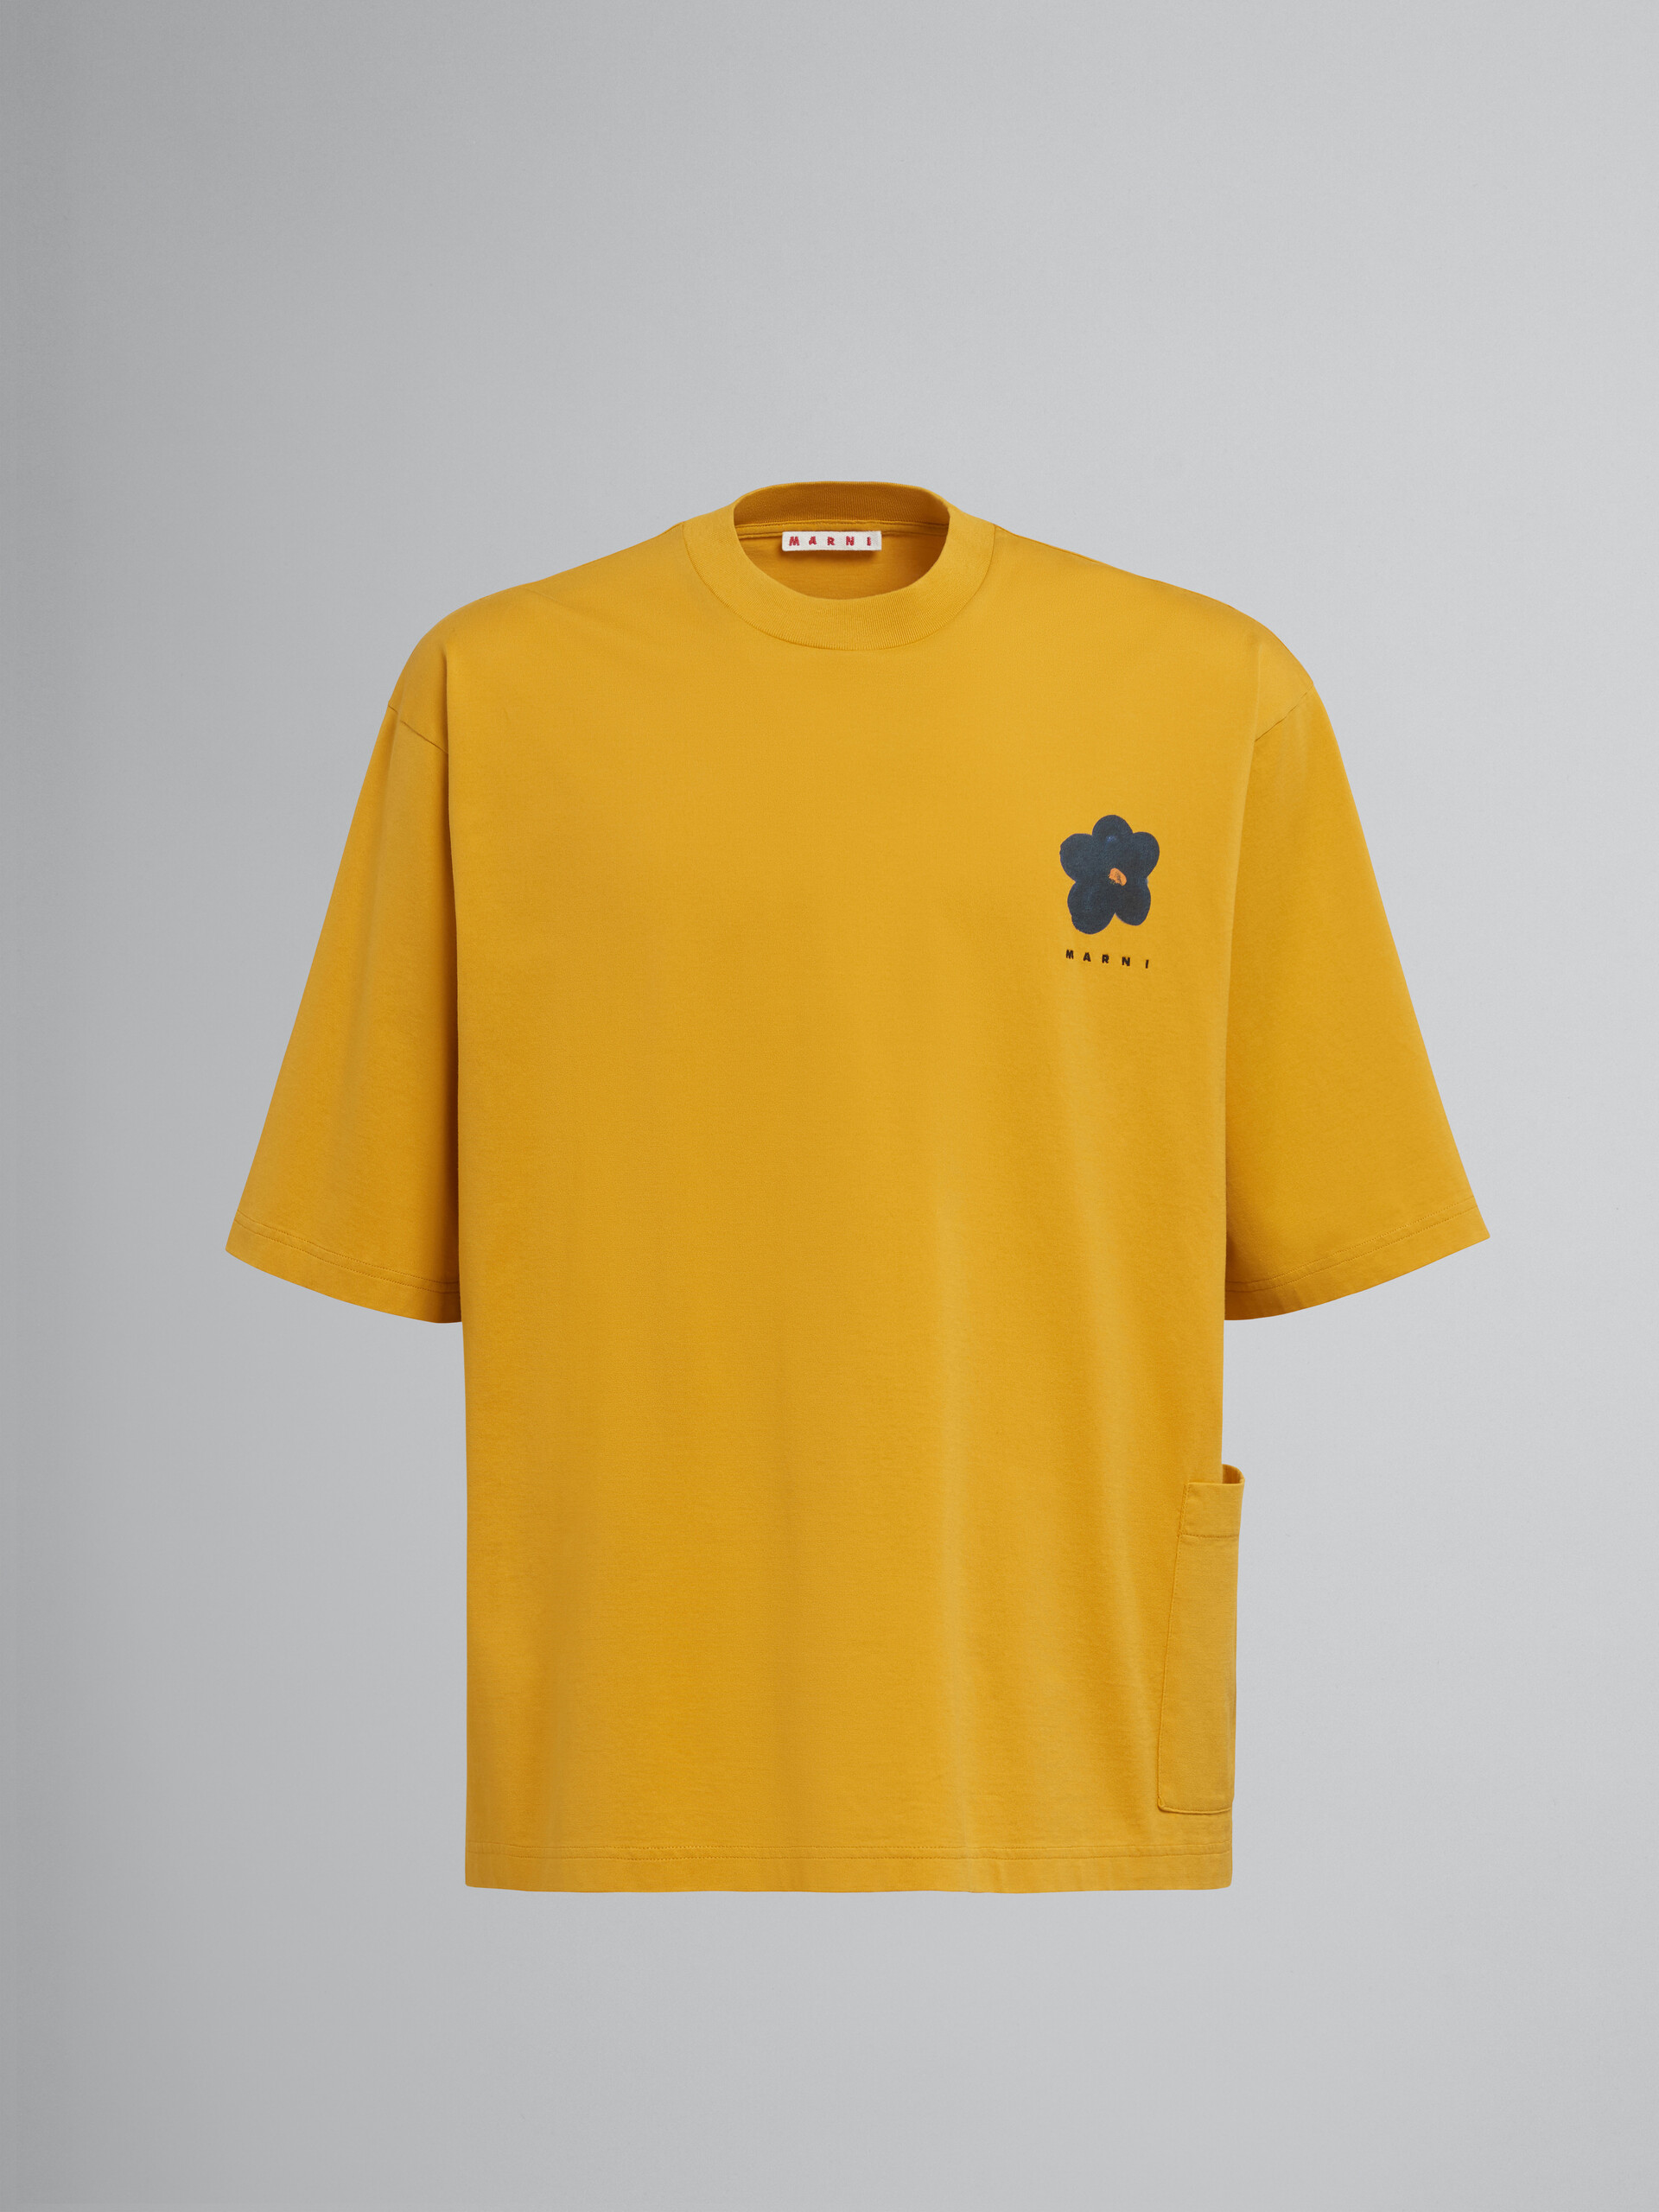 Black Daisy print yellow jersey crewneck T-shirt - T-shirts - Image 1